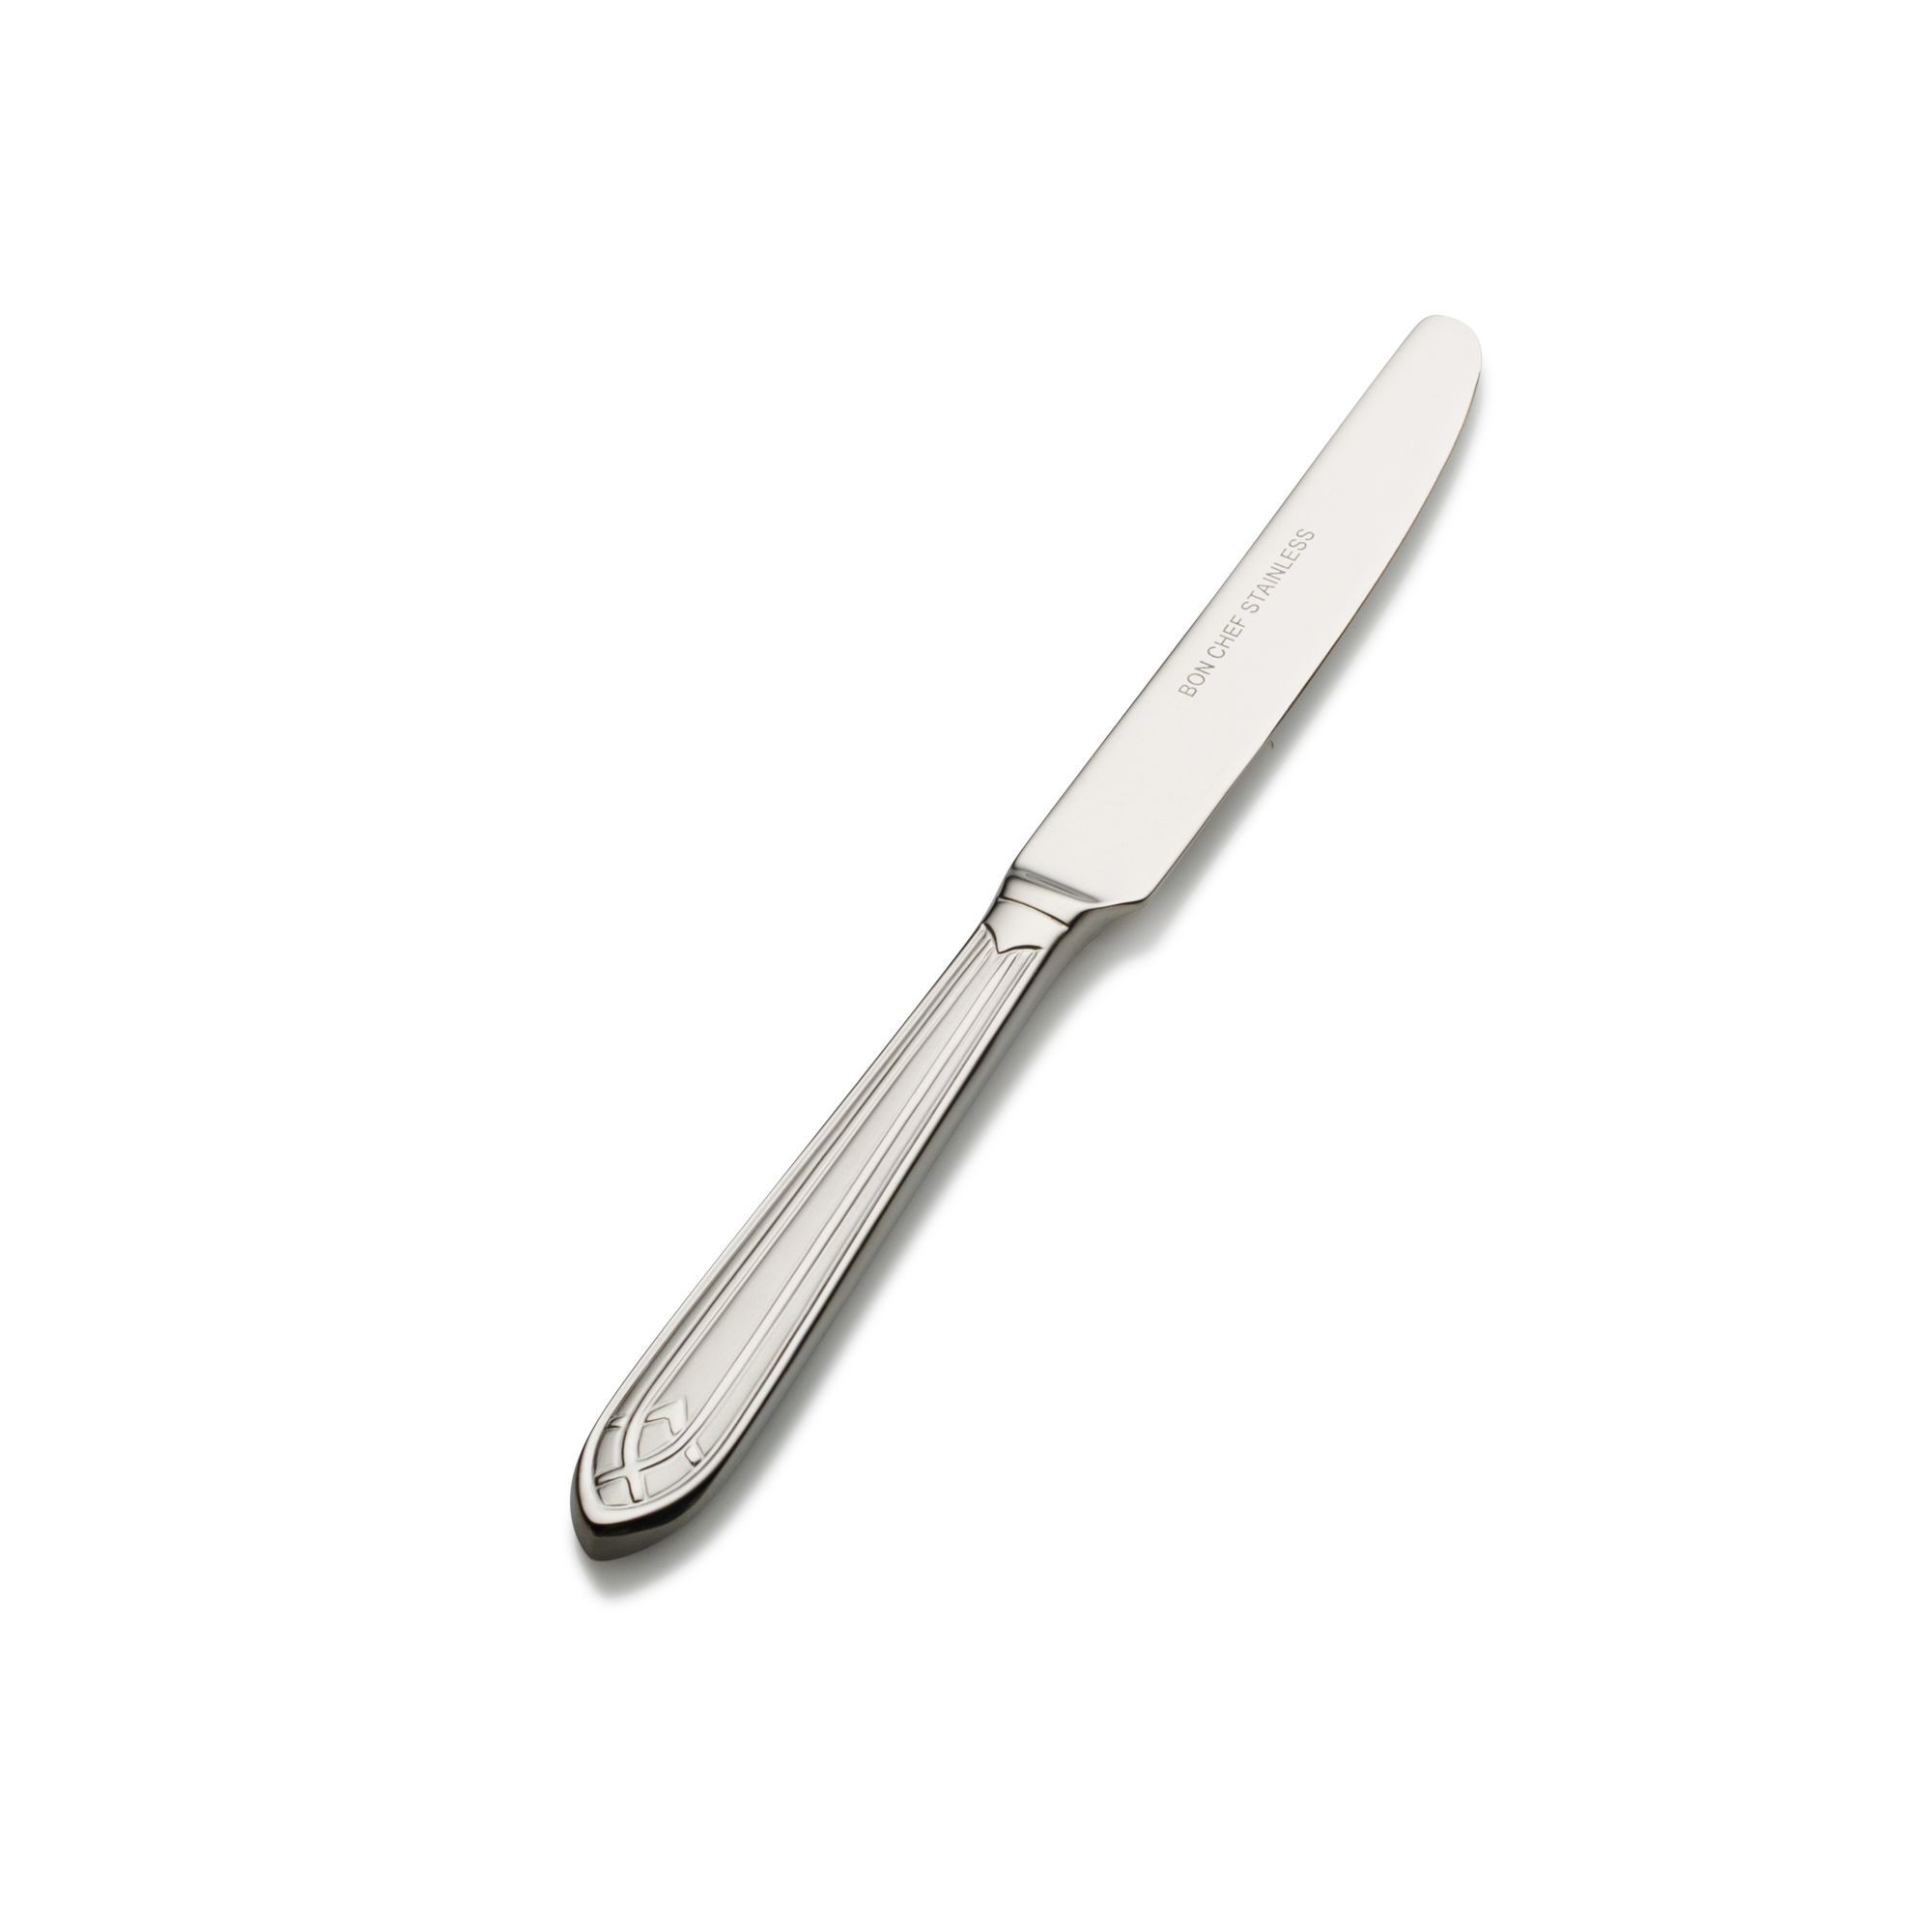 Bon Chef S1417S Viva 18/8 Stainless Steel  European Solid Handle Butter Knife